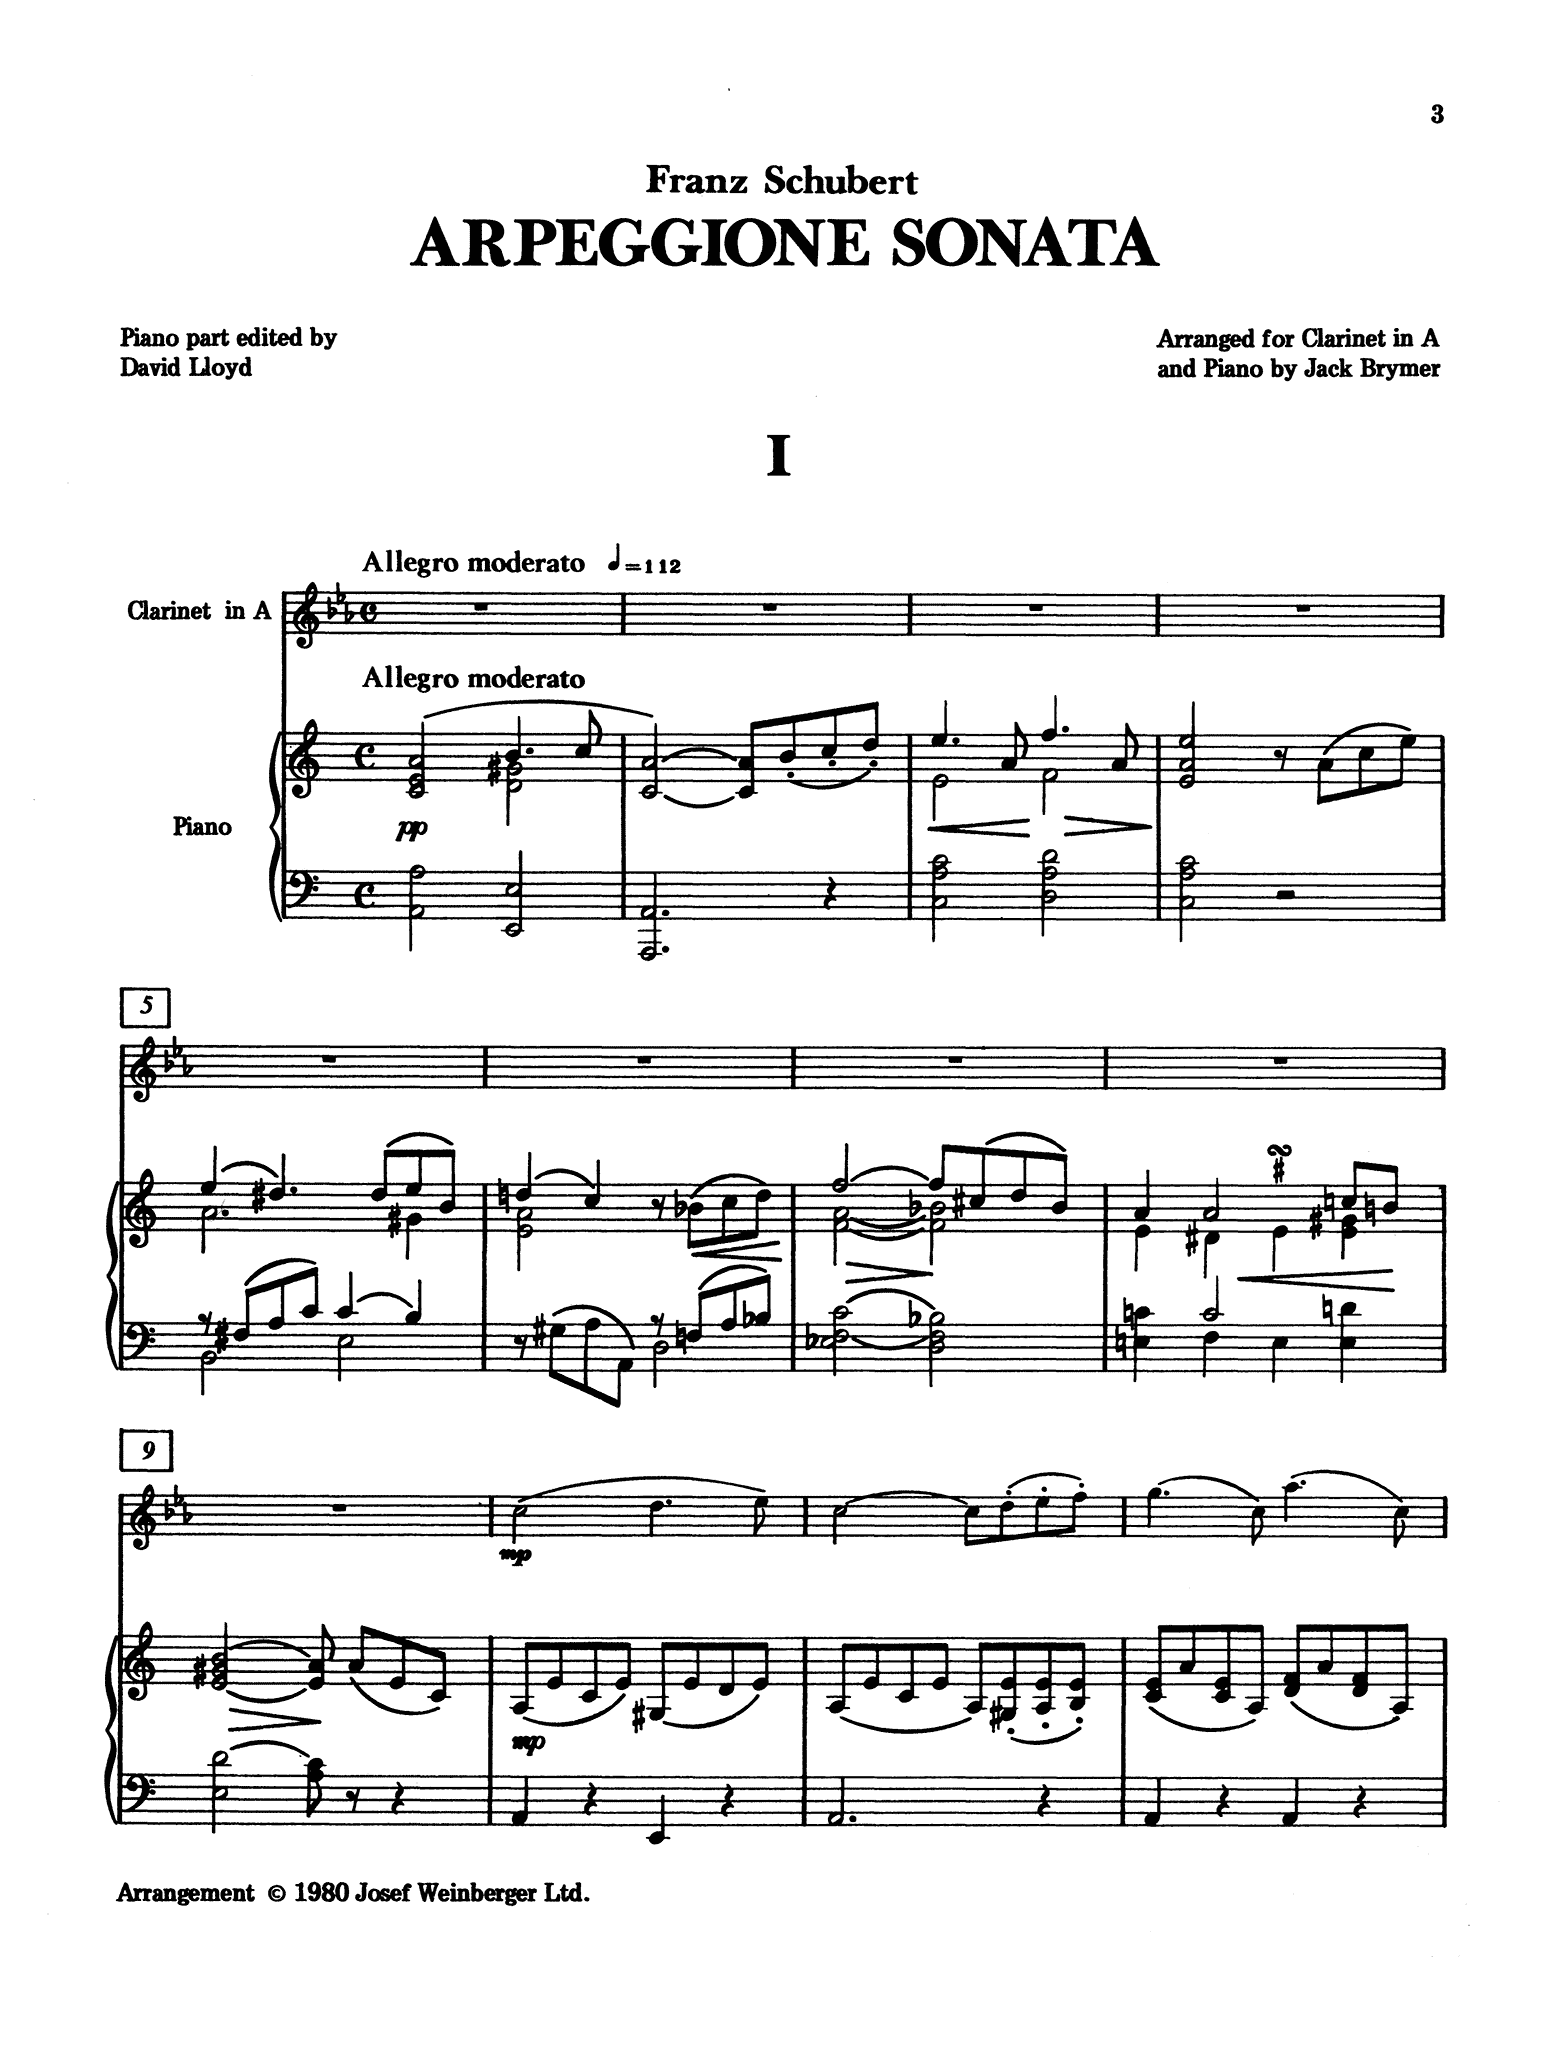 Schubert Arpeggione Sonata arranged for A Clarinet & Piano by Jack Brymer - Movement 1